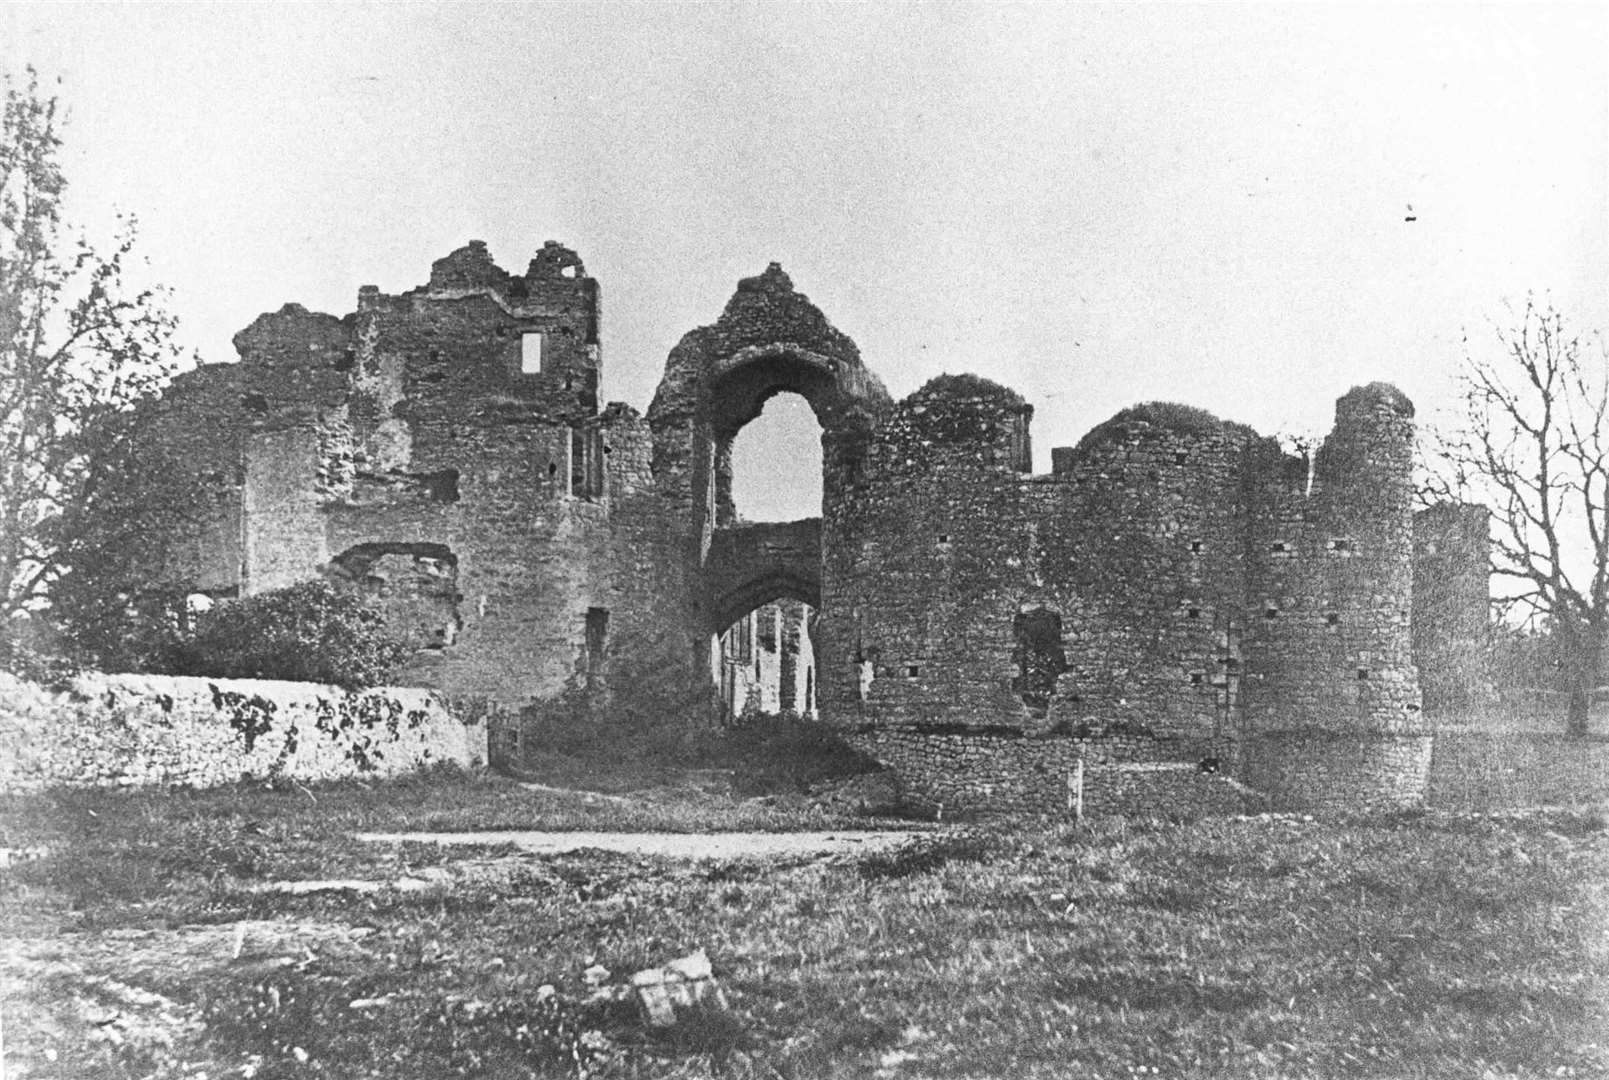 The ruins of Leybourne Castle in September 1976